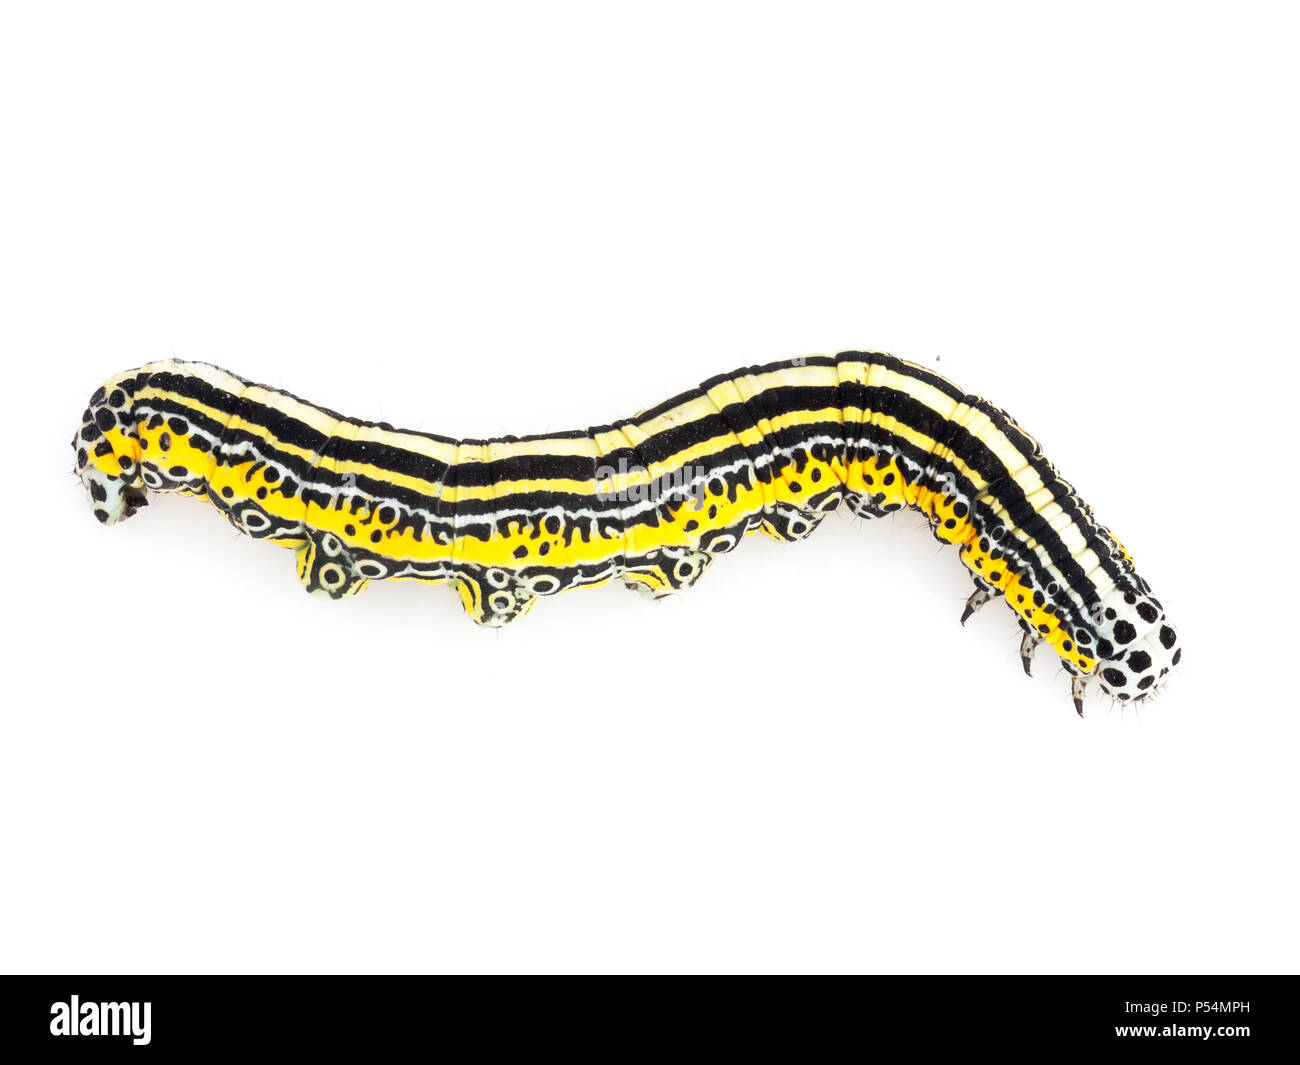 Negro, amarillo y blanco rayado de la larva de la polilla Apopestes spectrum.. Fondo blanco. Foto de stock